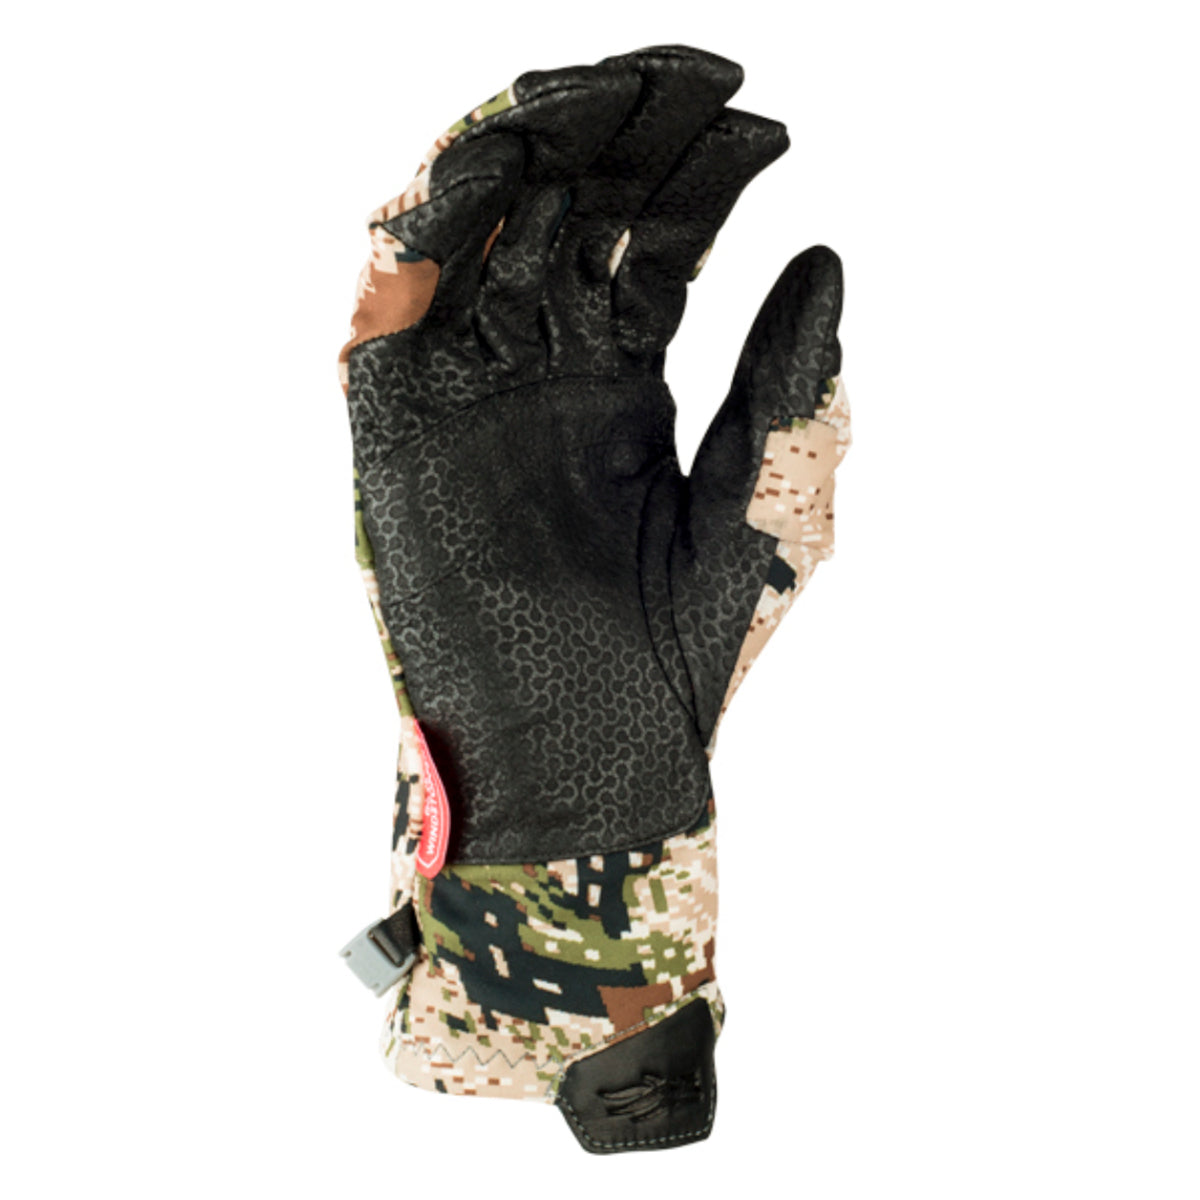 Sitka Mountain Glove